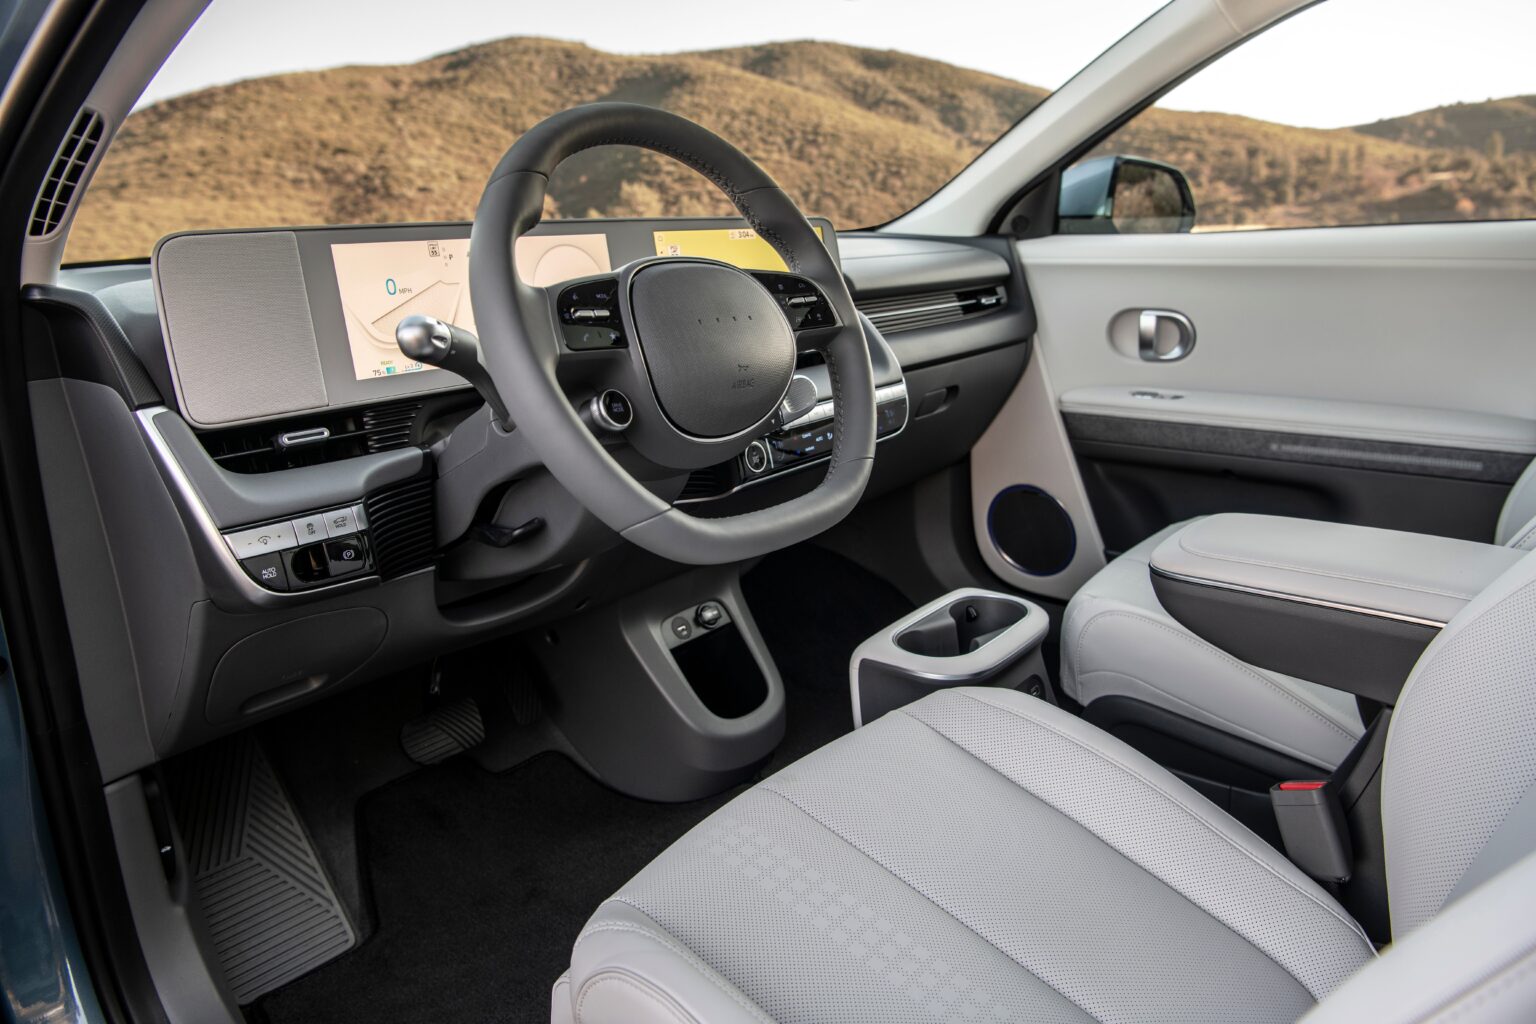 2023 Hyundai Ioniq 5 Interior Image 2